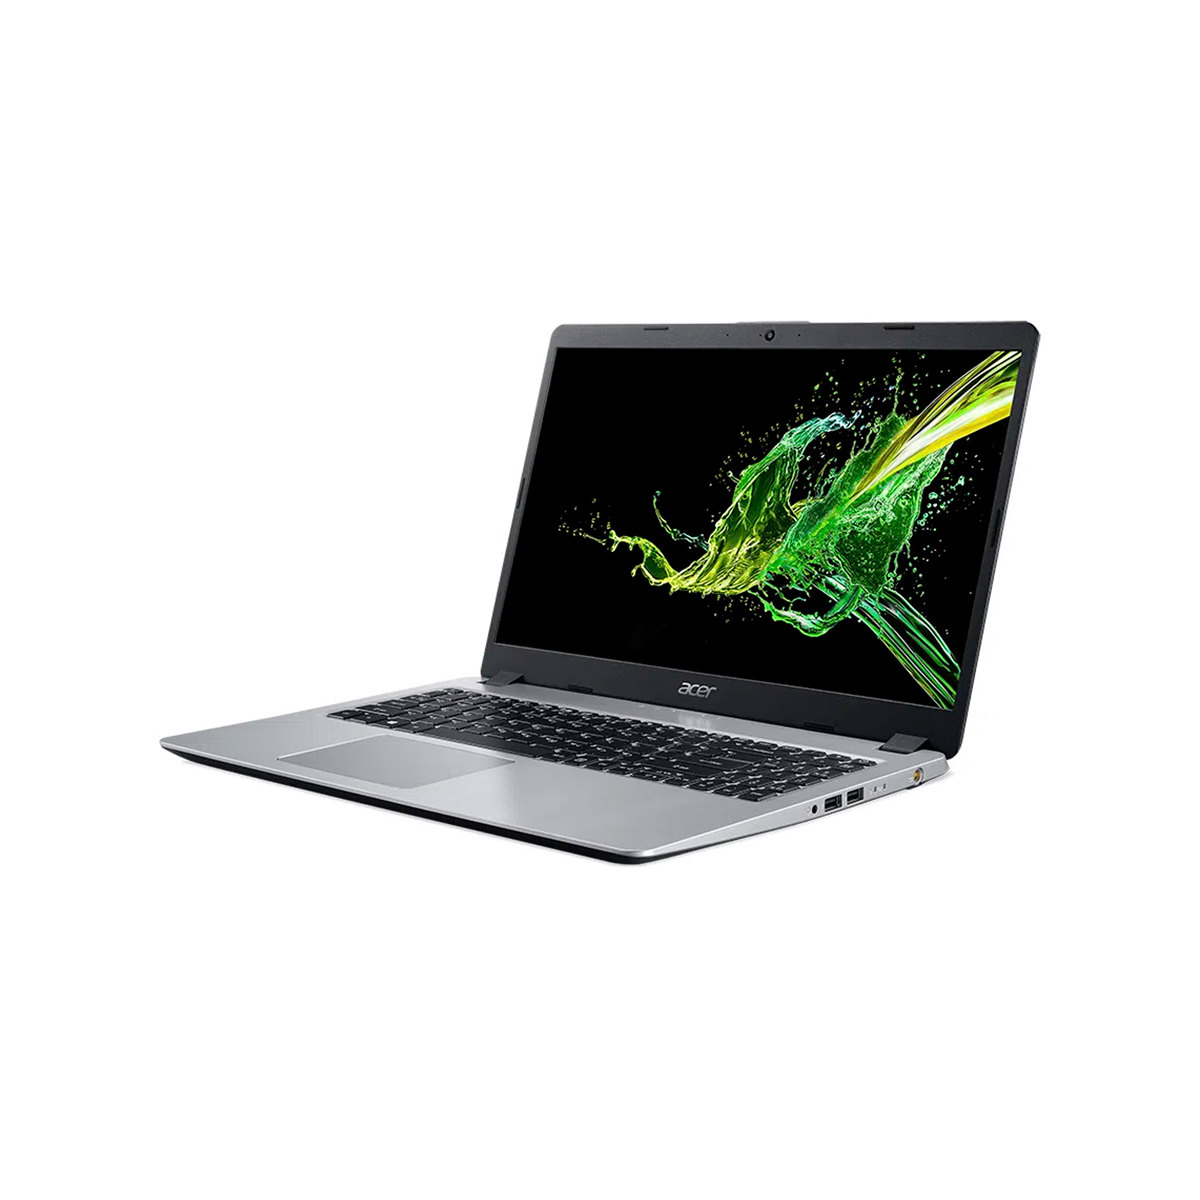 Notebook Acer A515 Core I5 8265u Memoria 4gb Ddr4 Ssd 240gb Tela 15.6' Led Hd Windows 10 Home